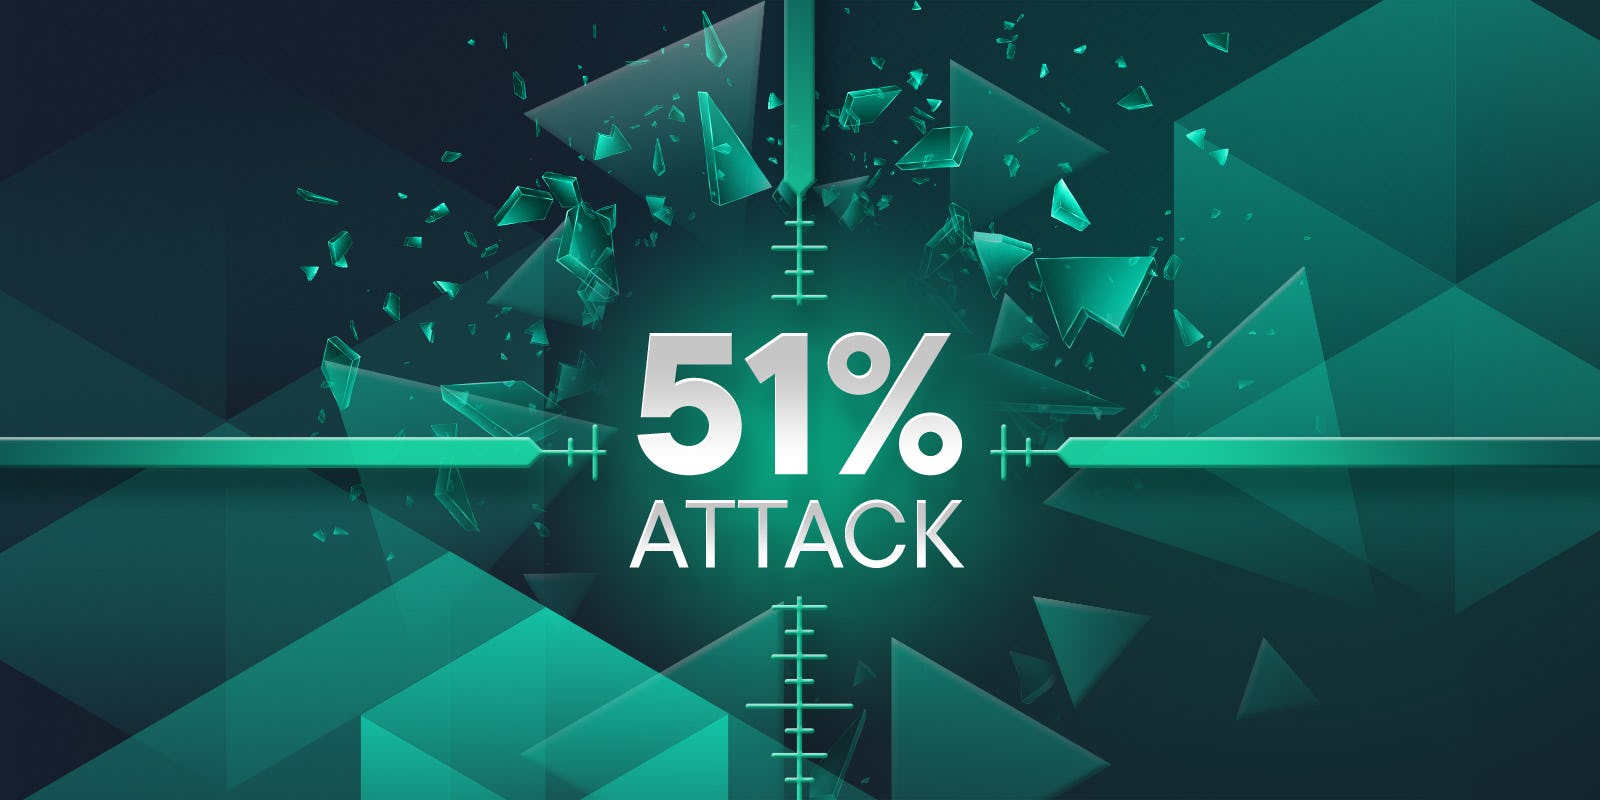 51% attack within blockchain